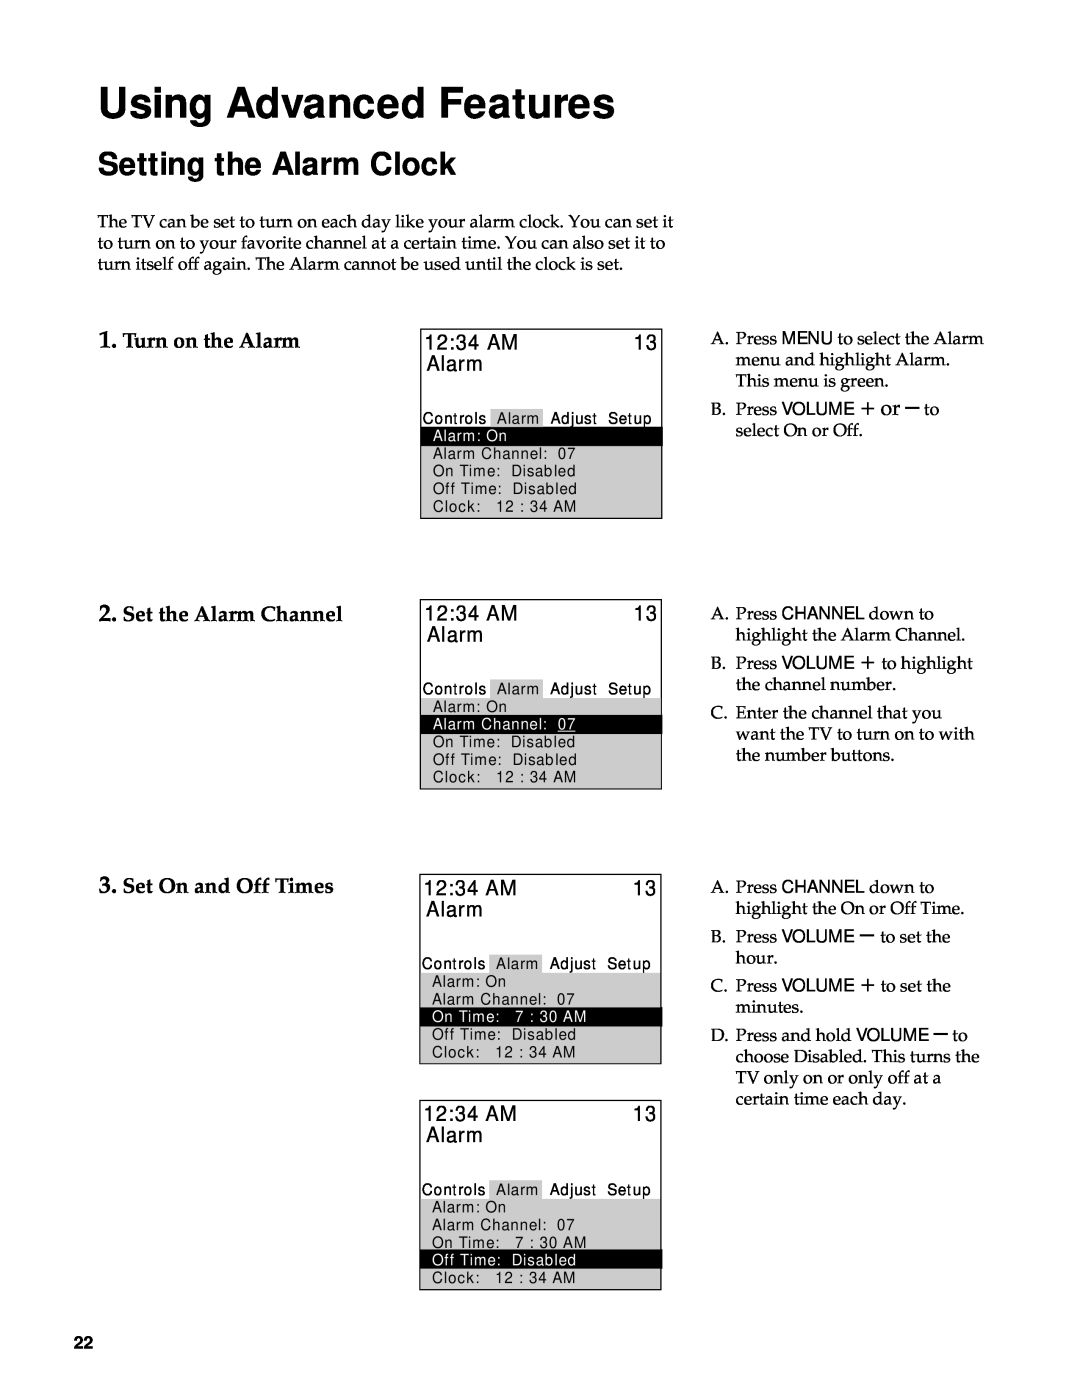 RCA 27000 manual Setting the Alarm Clock, Turn on the Alarm, 1234 AM, Set the Alarm Channel, Set On and Off Times 